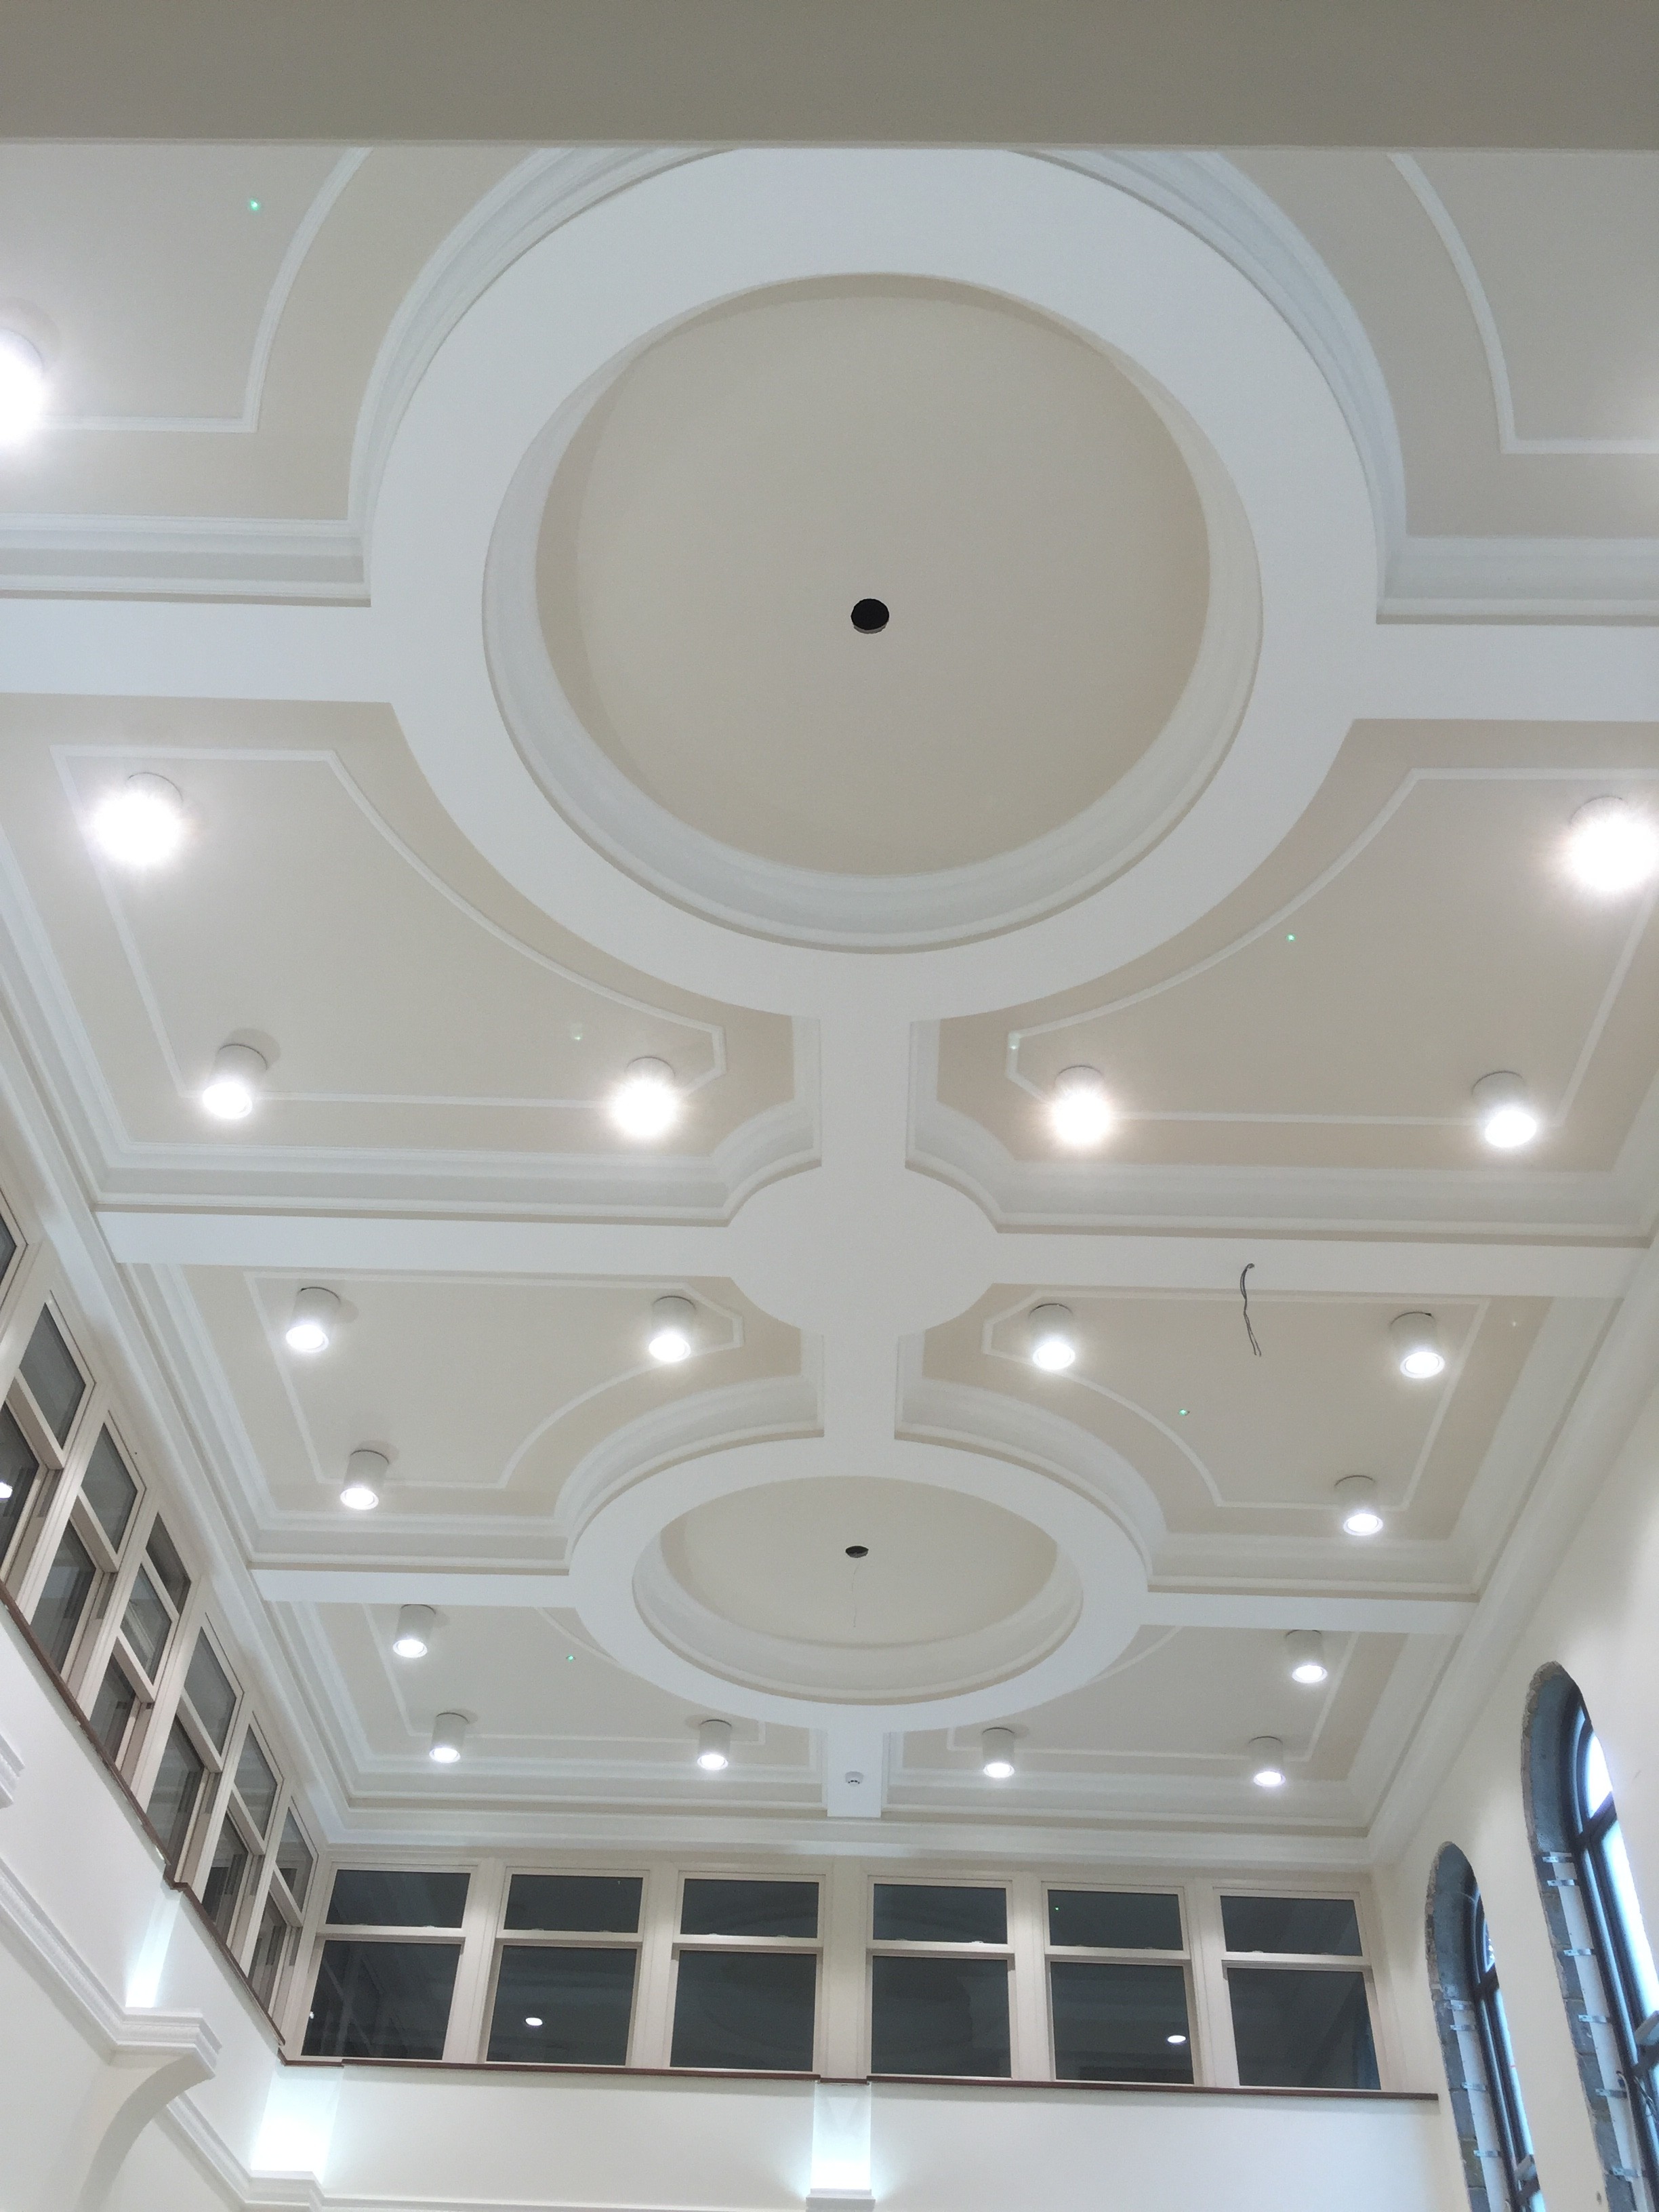 Plasterboard detailed ceiling,